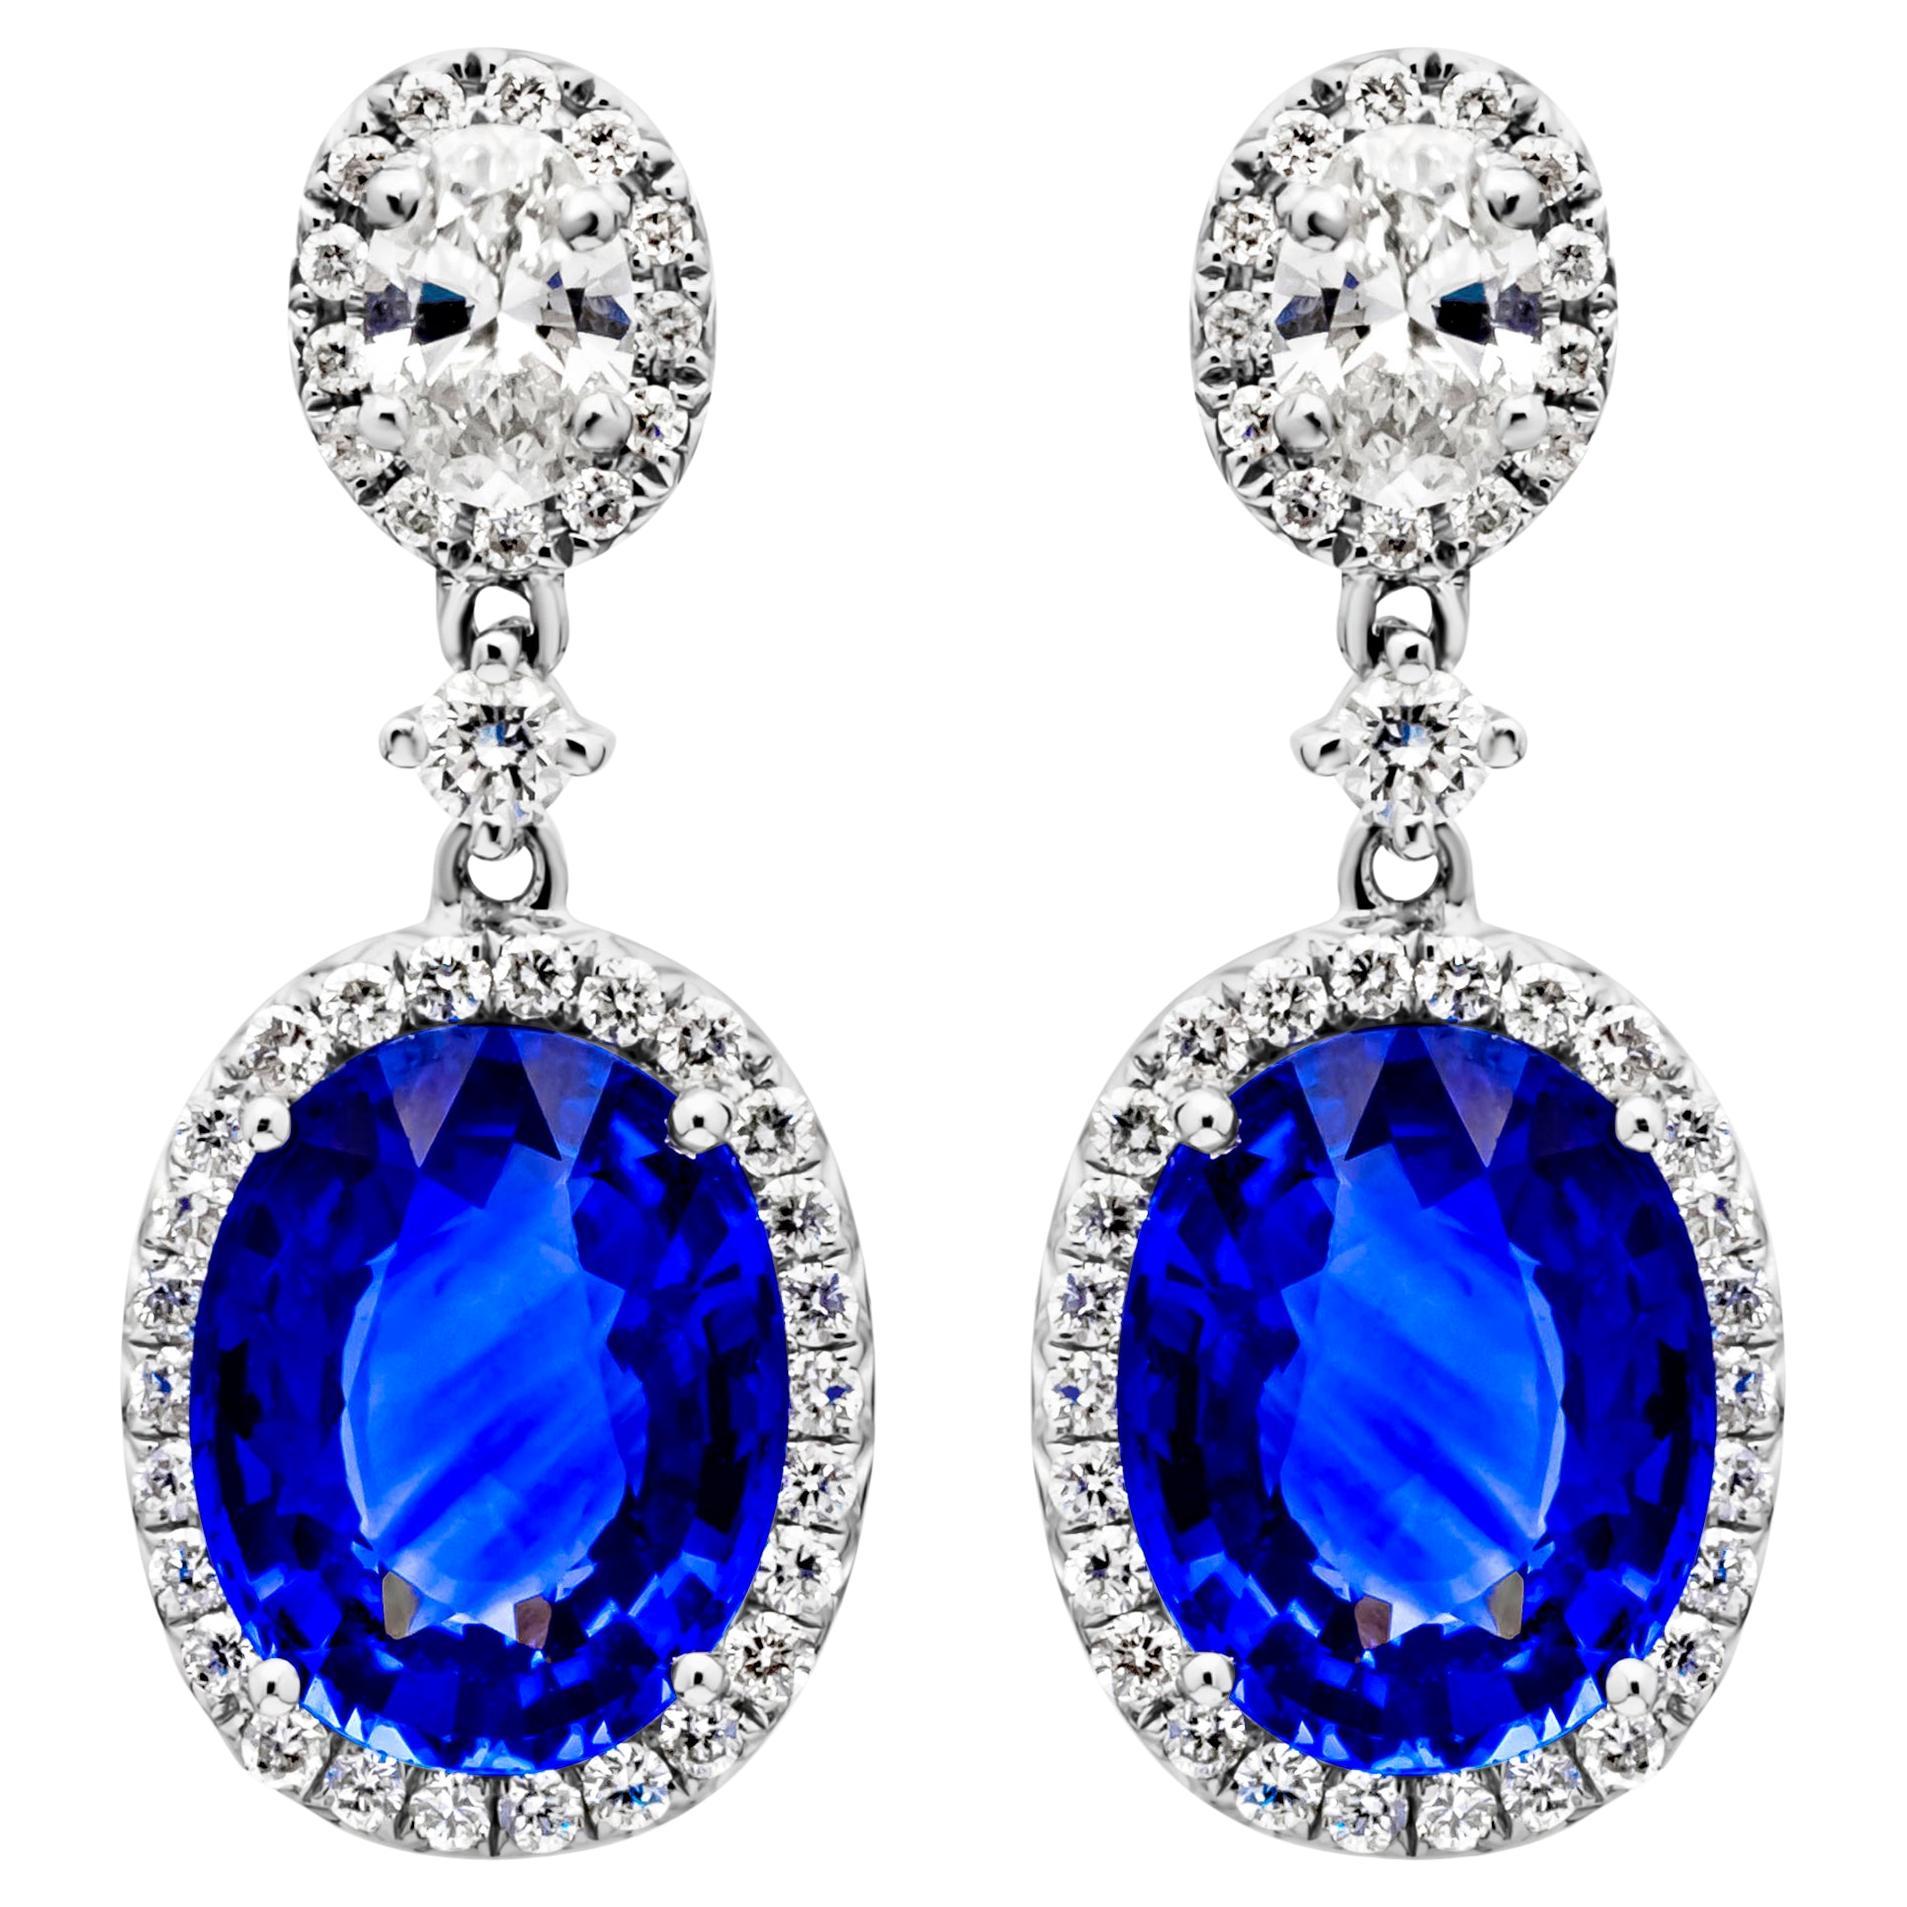 Roman Malakov 4.38 Carats Total Oval Cut Blue Sapphire & Diamond Dangle Earrings